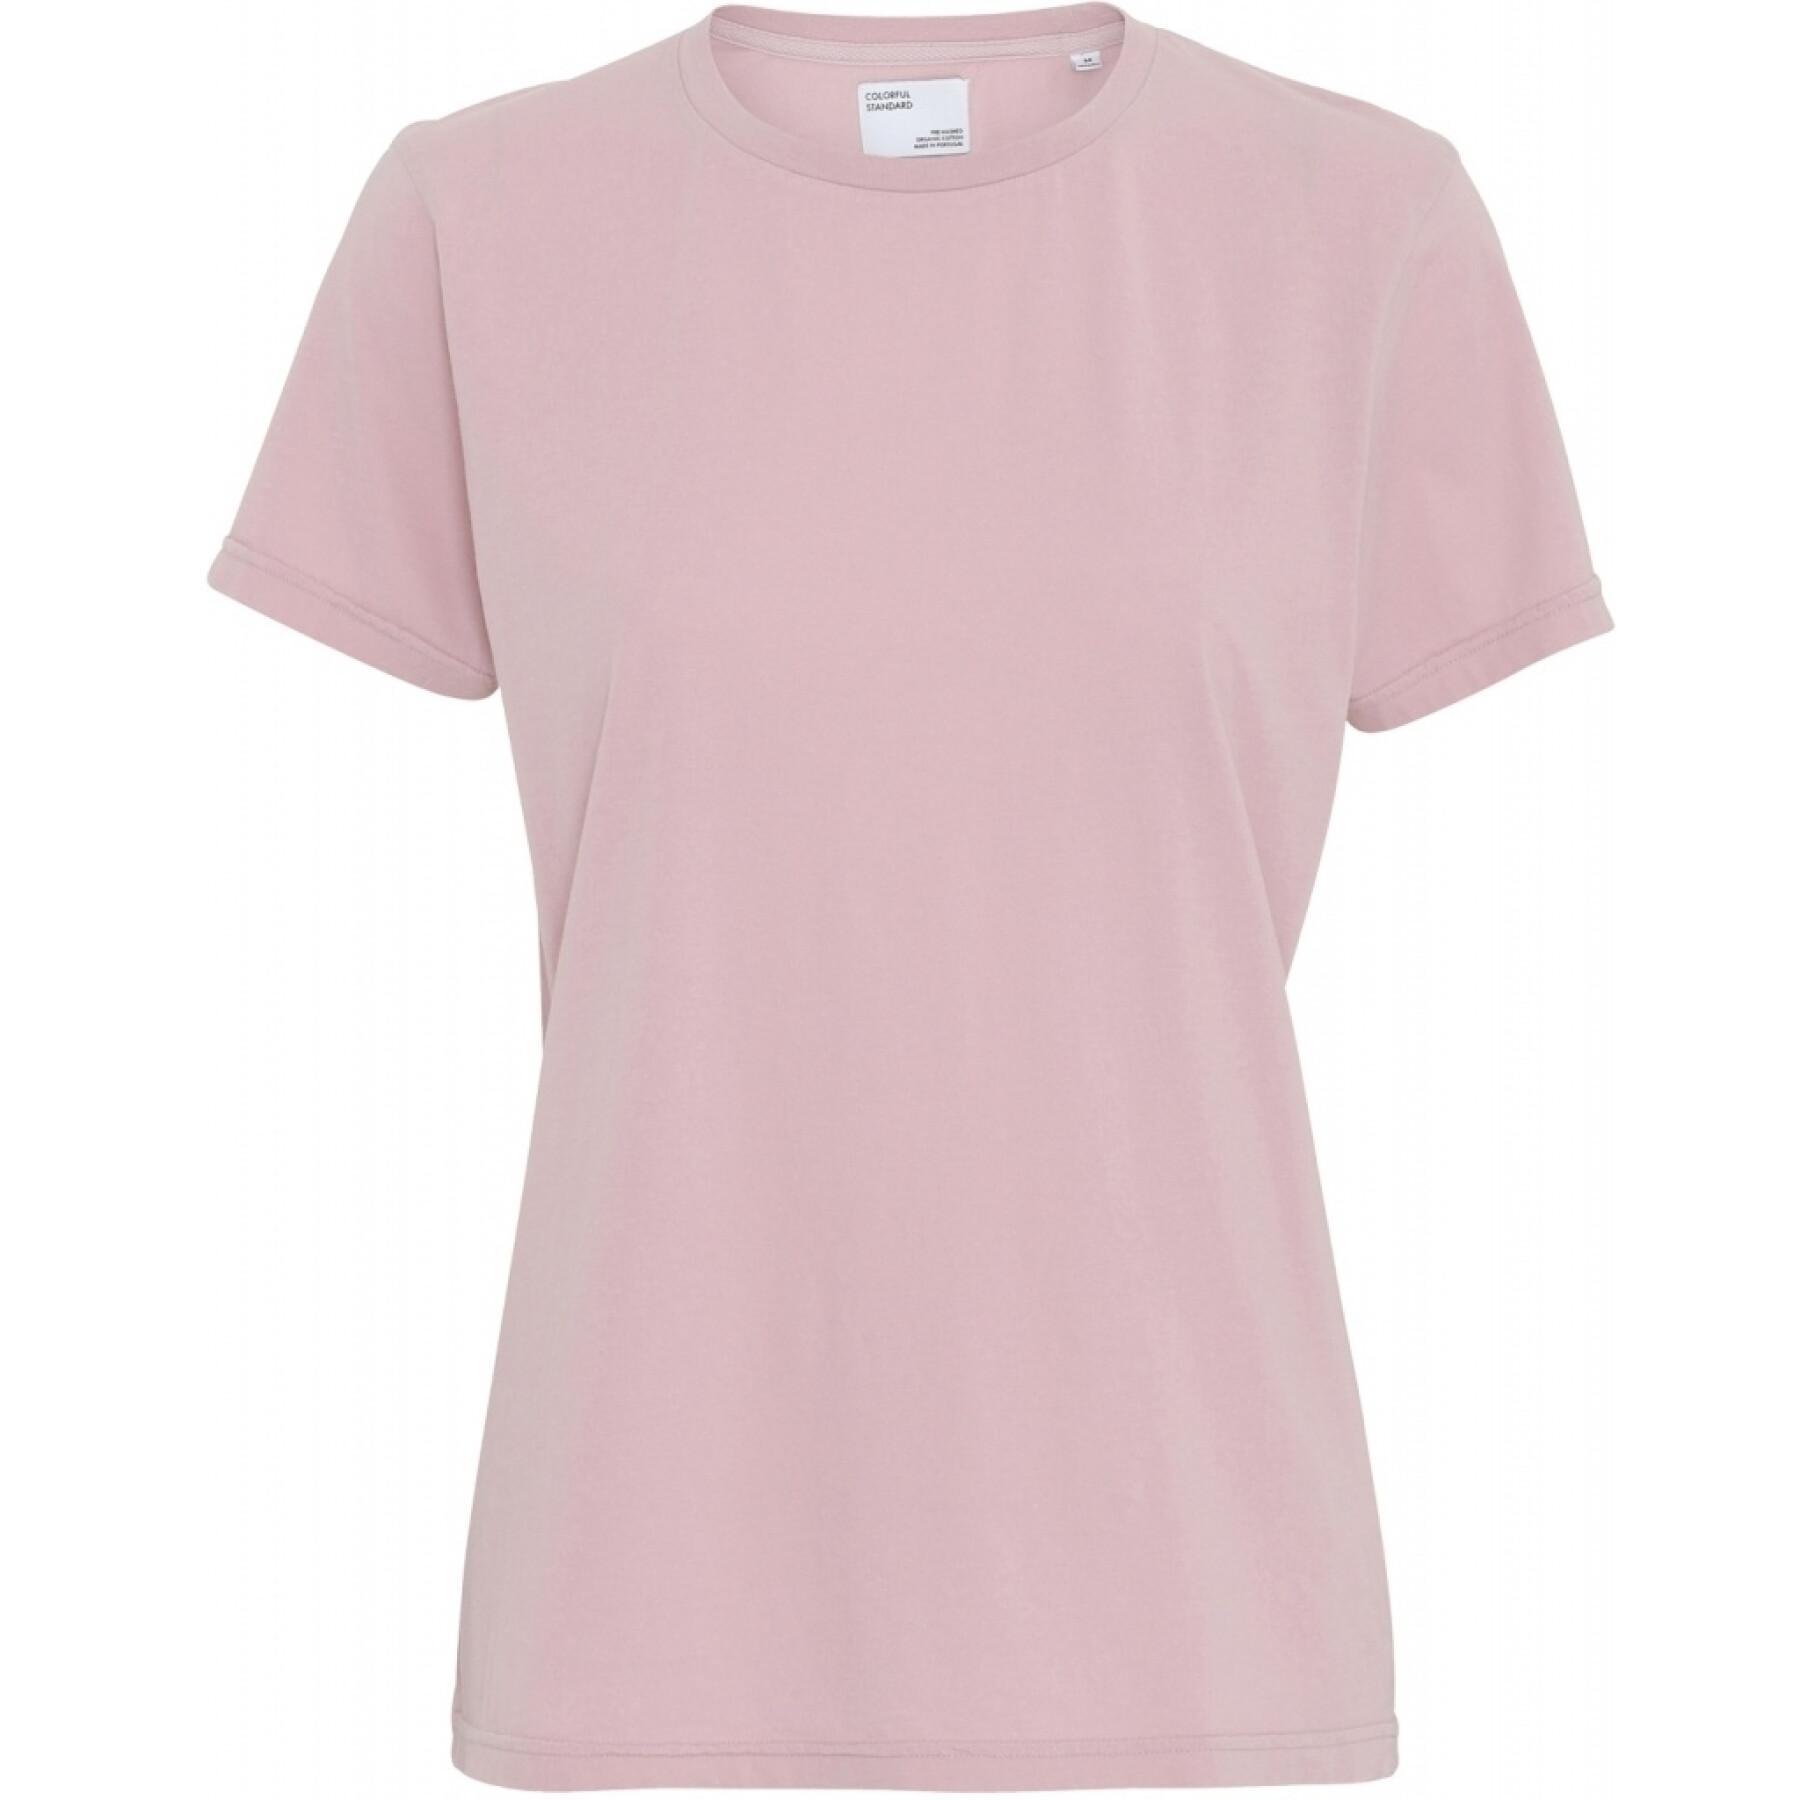 Women's T-shirt Colorful Standard Light Organic faded pink